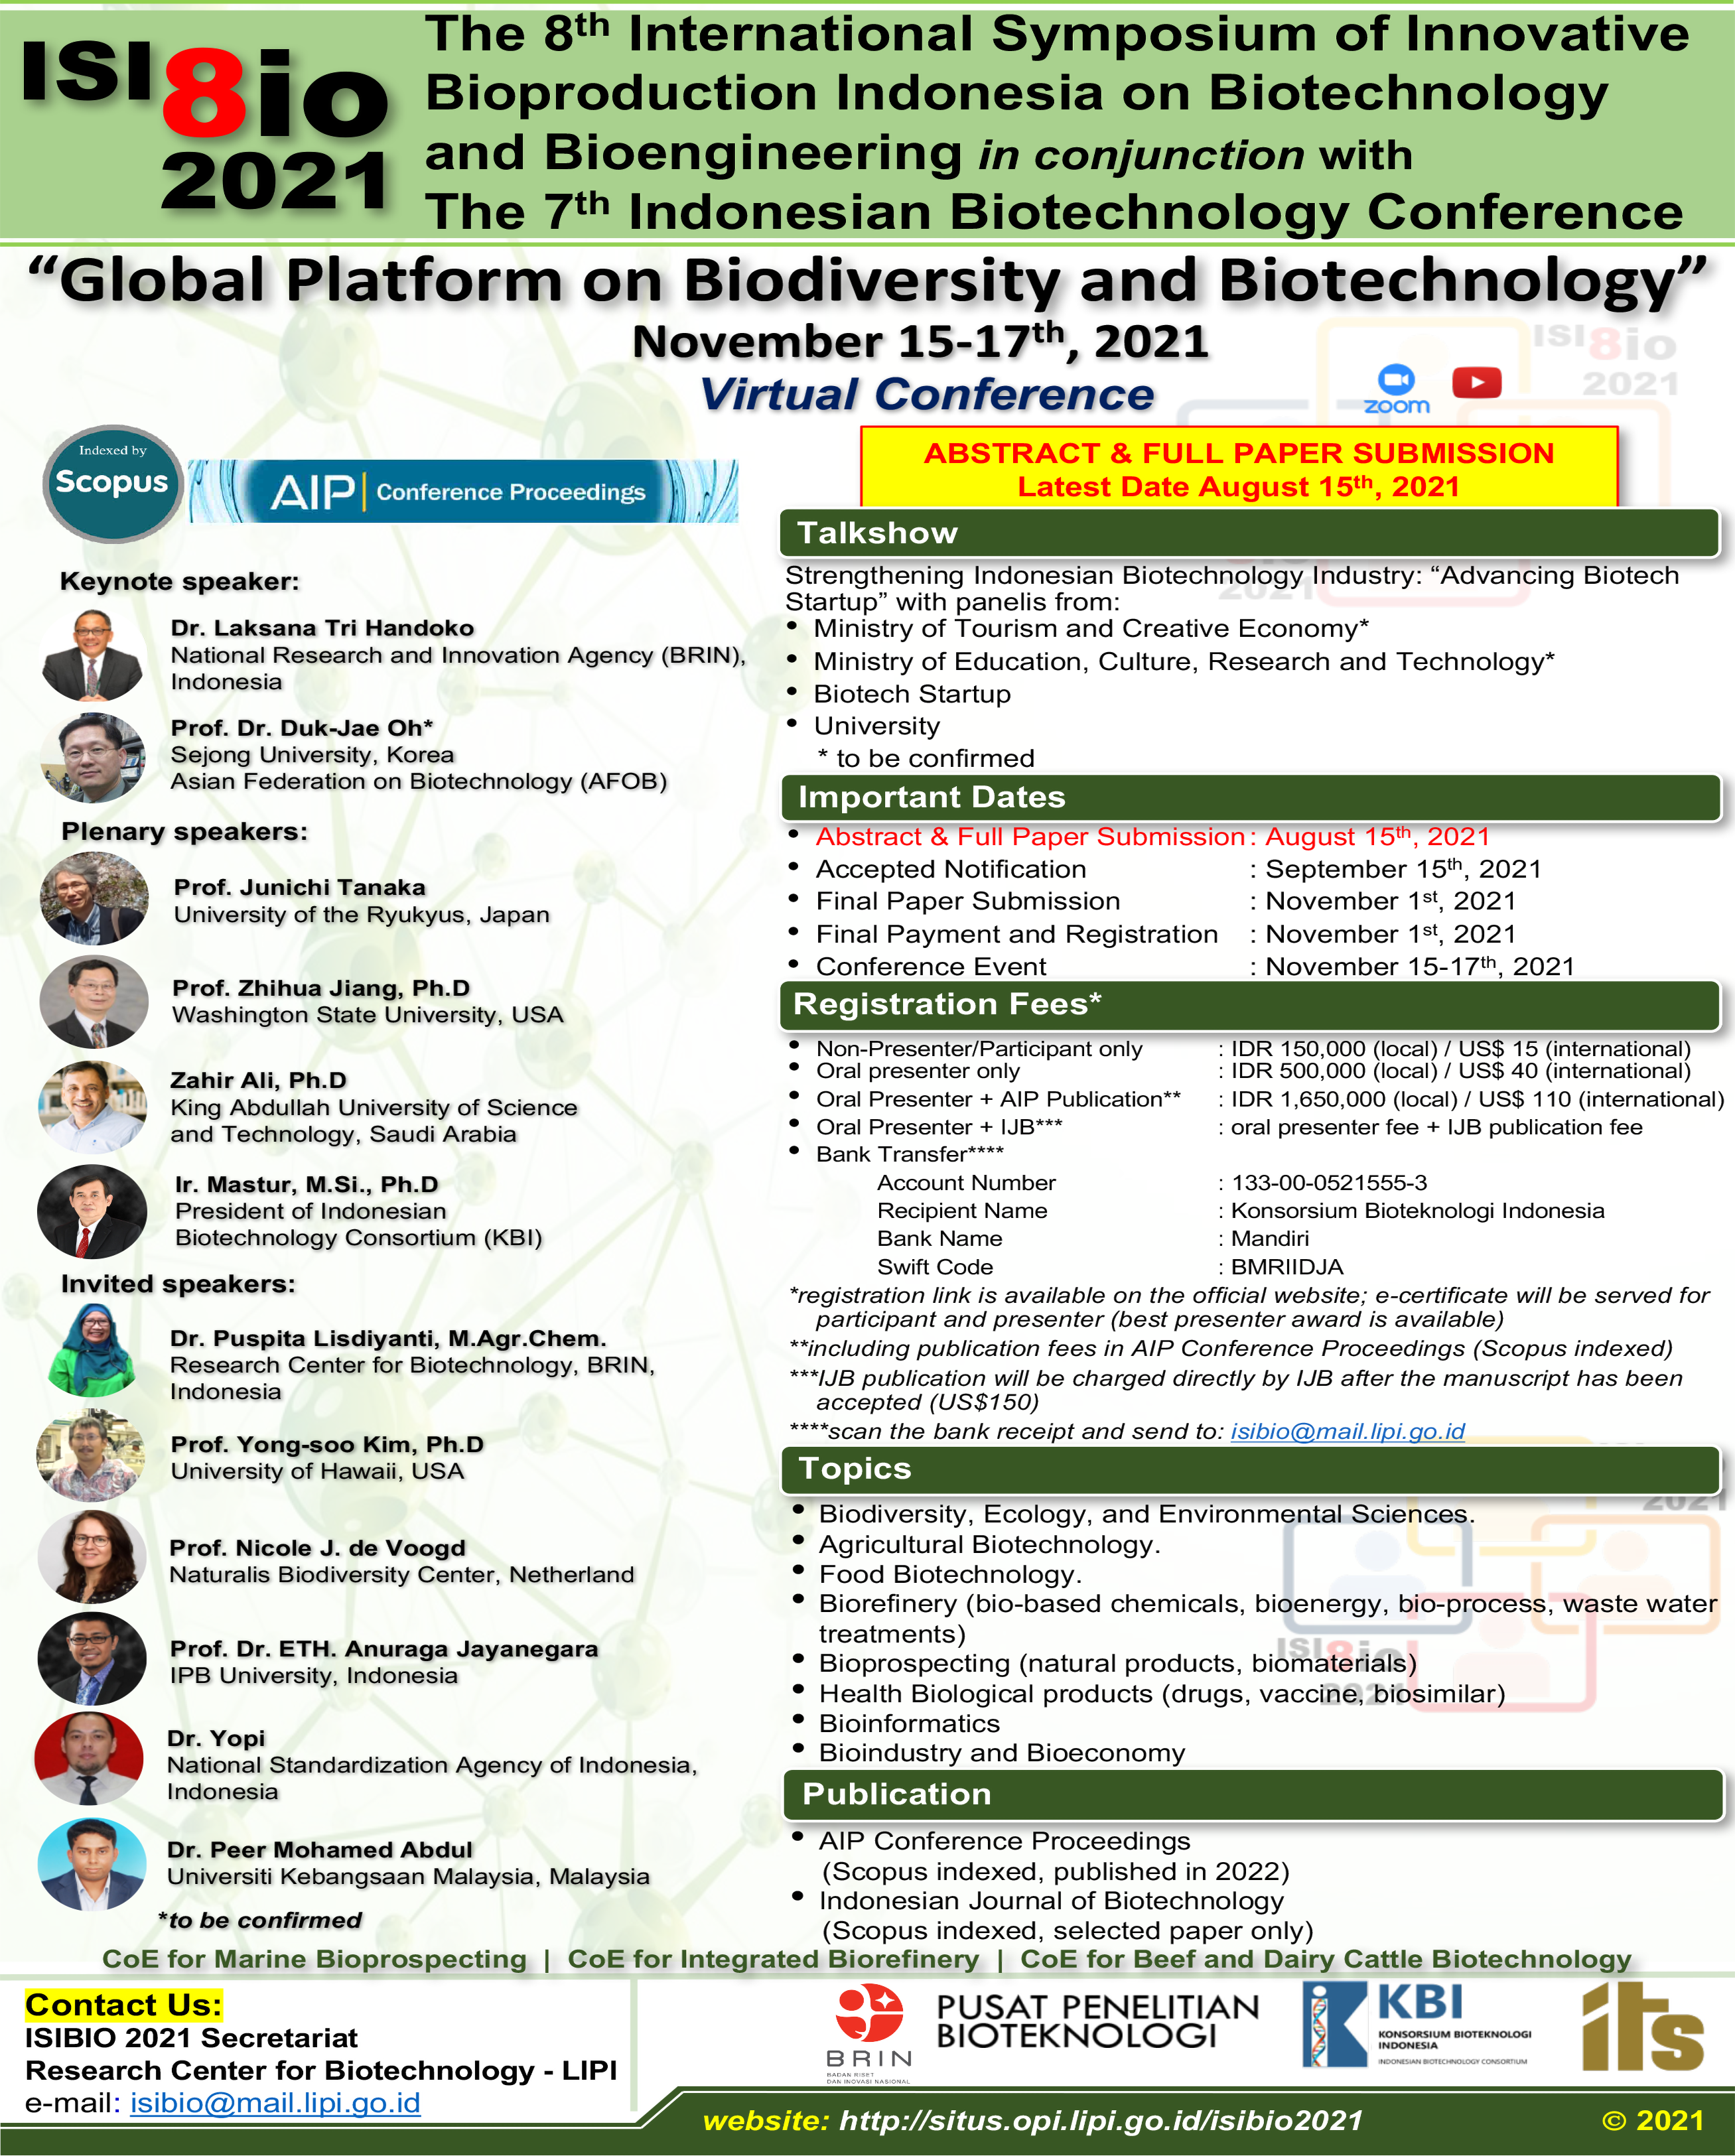 The 8th International Symposium of Innovative Bioproduction Indonesia on Biotechnology and Bioengineering 2021 (ISIBIO 2021)